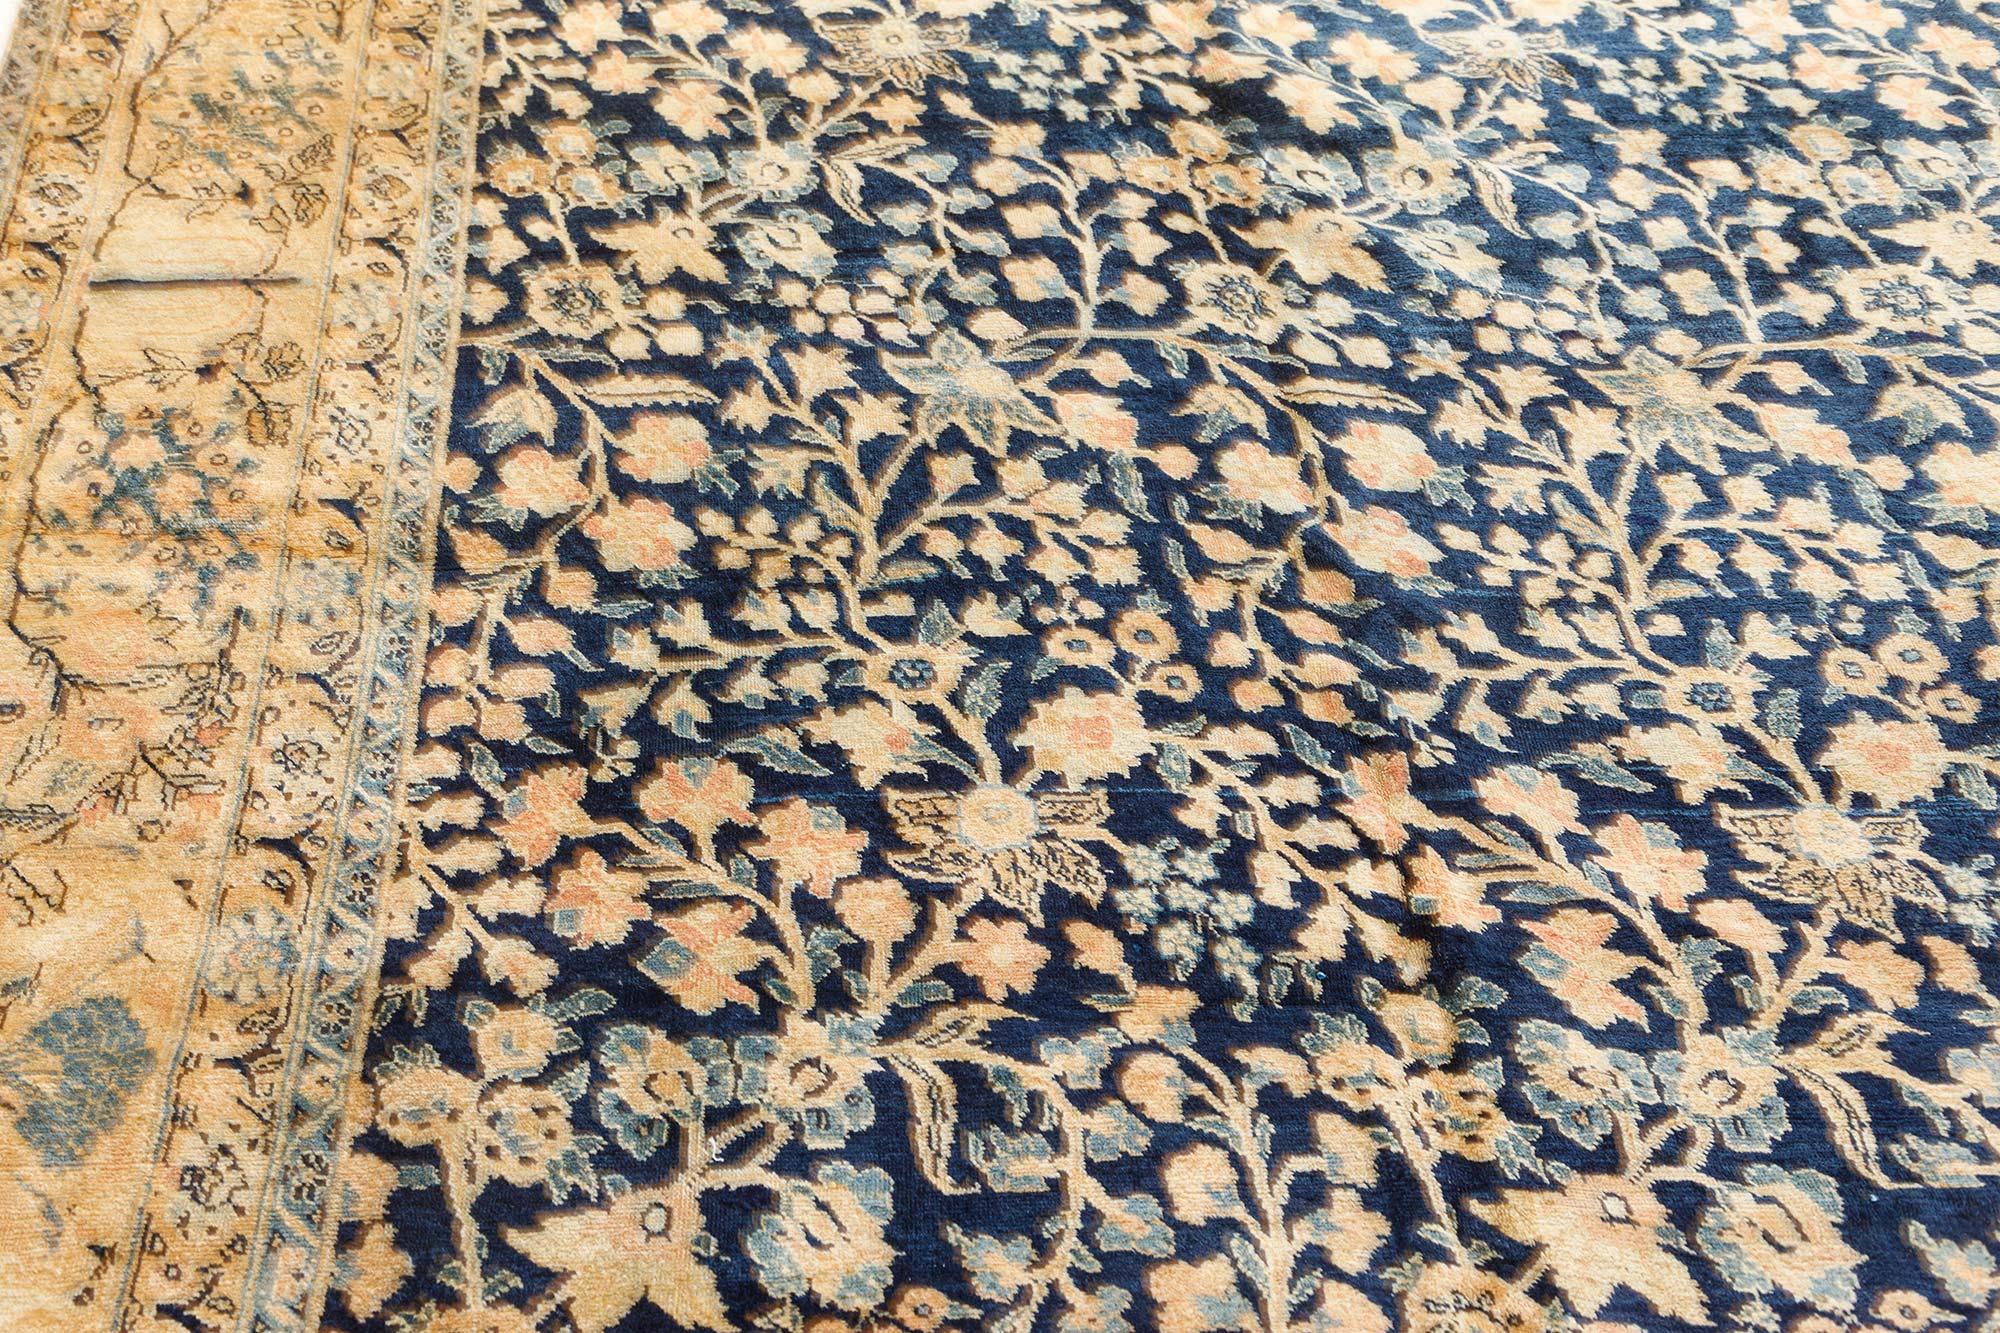 Authentic Persian Tabriz Handmade wool carpet
Size: 10'7